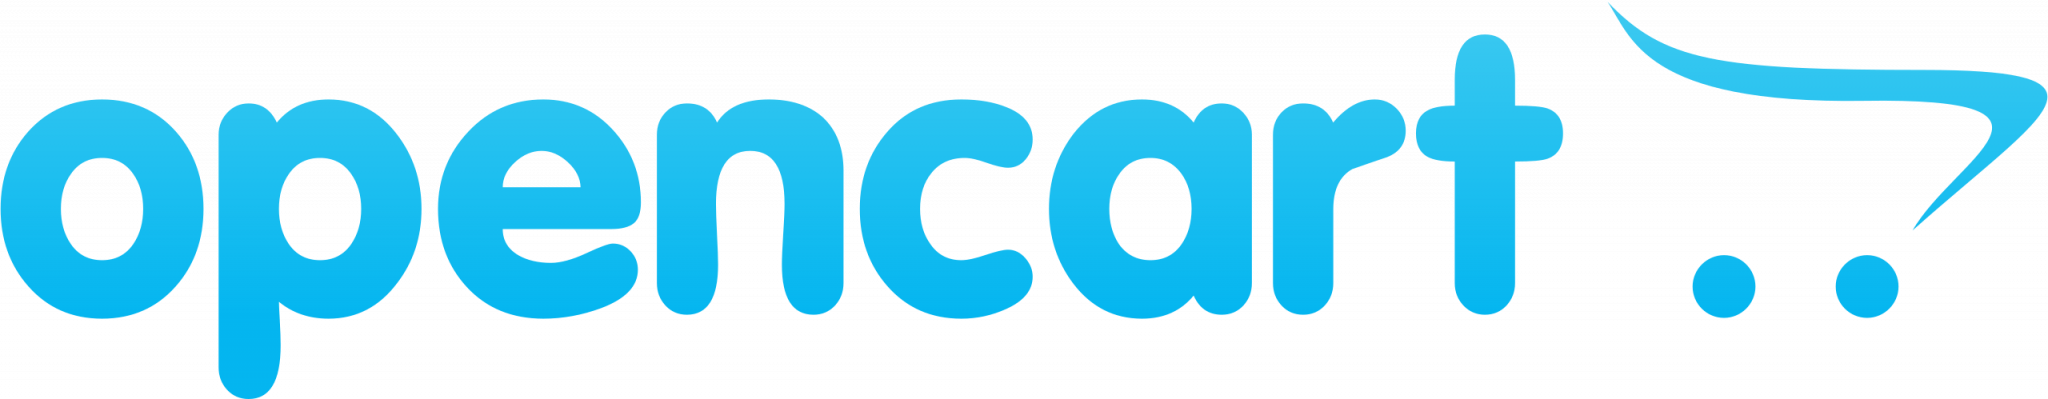 OpenCart-Logo-2048x399